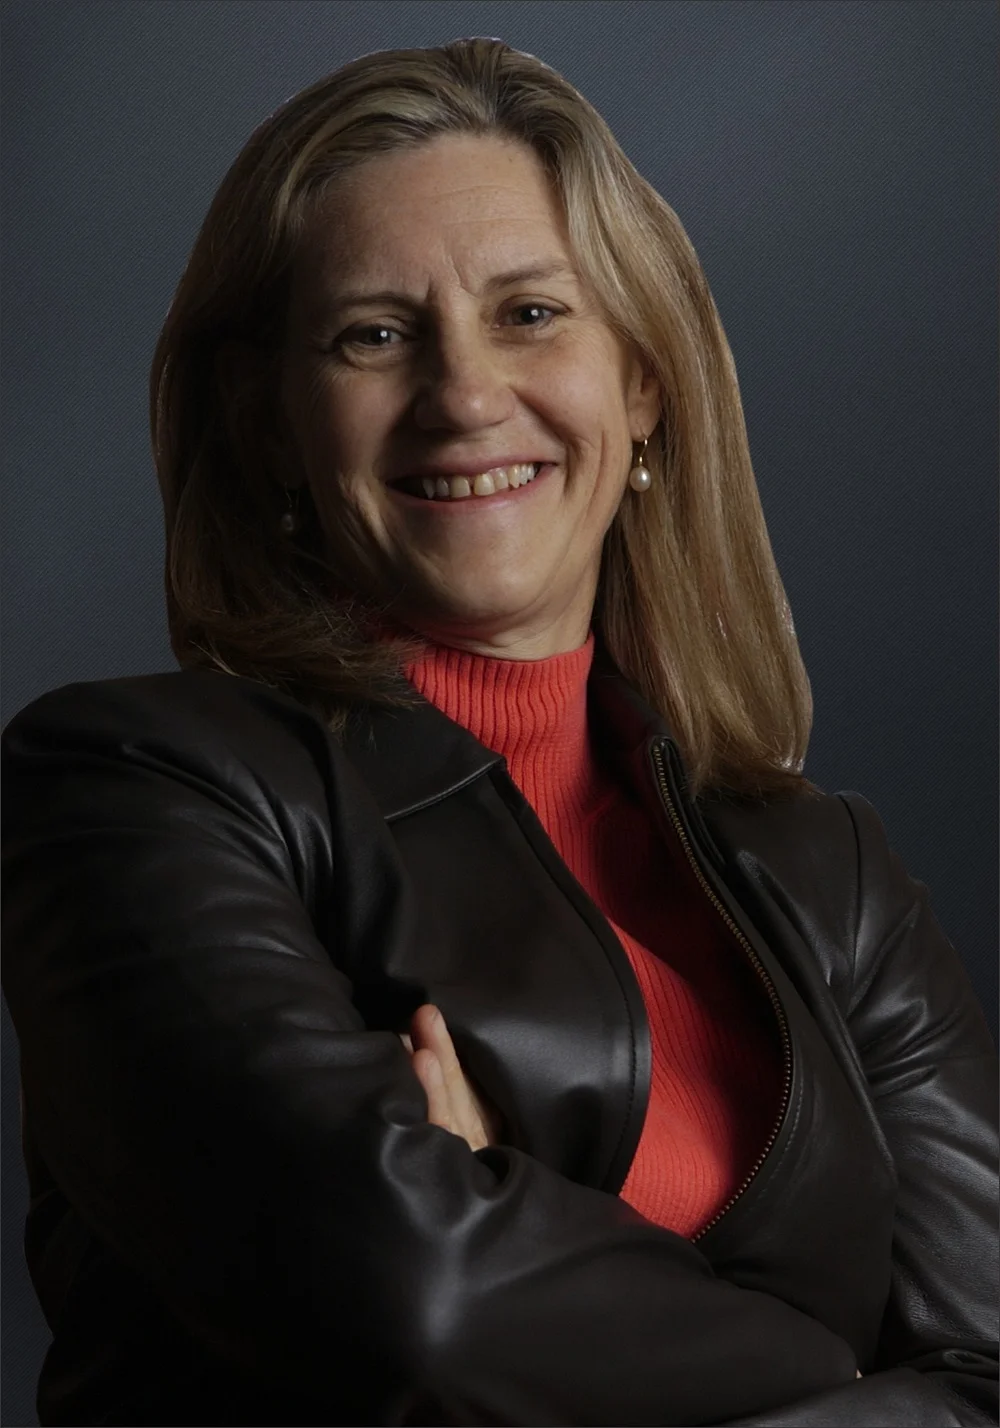 Dr. Linda Duxbury